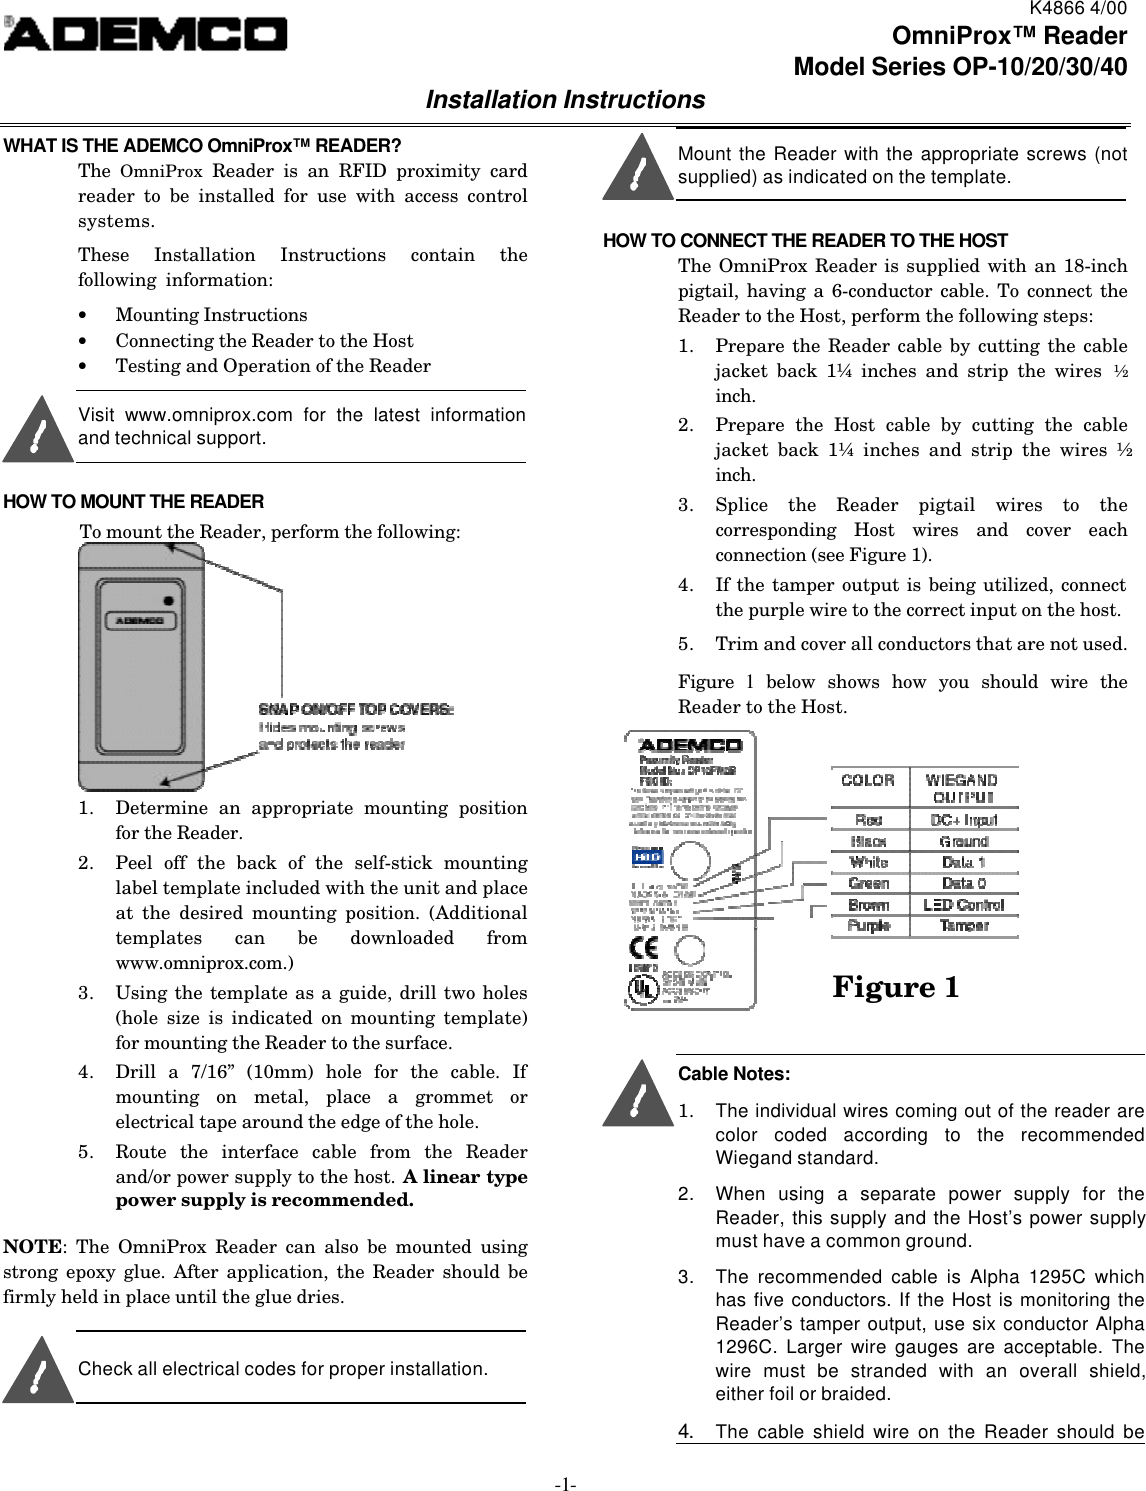 rosslare access control manual pdf